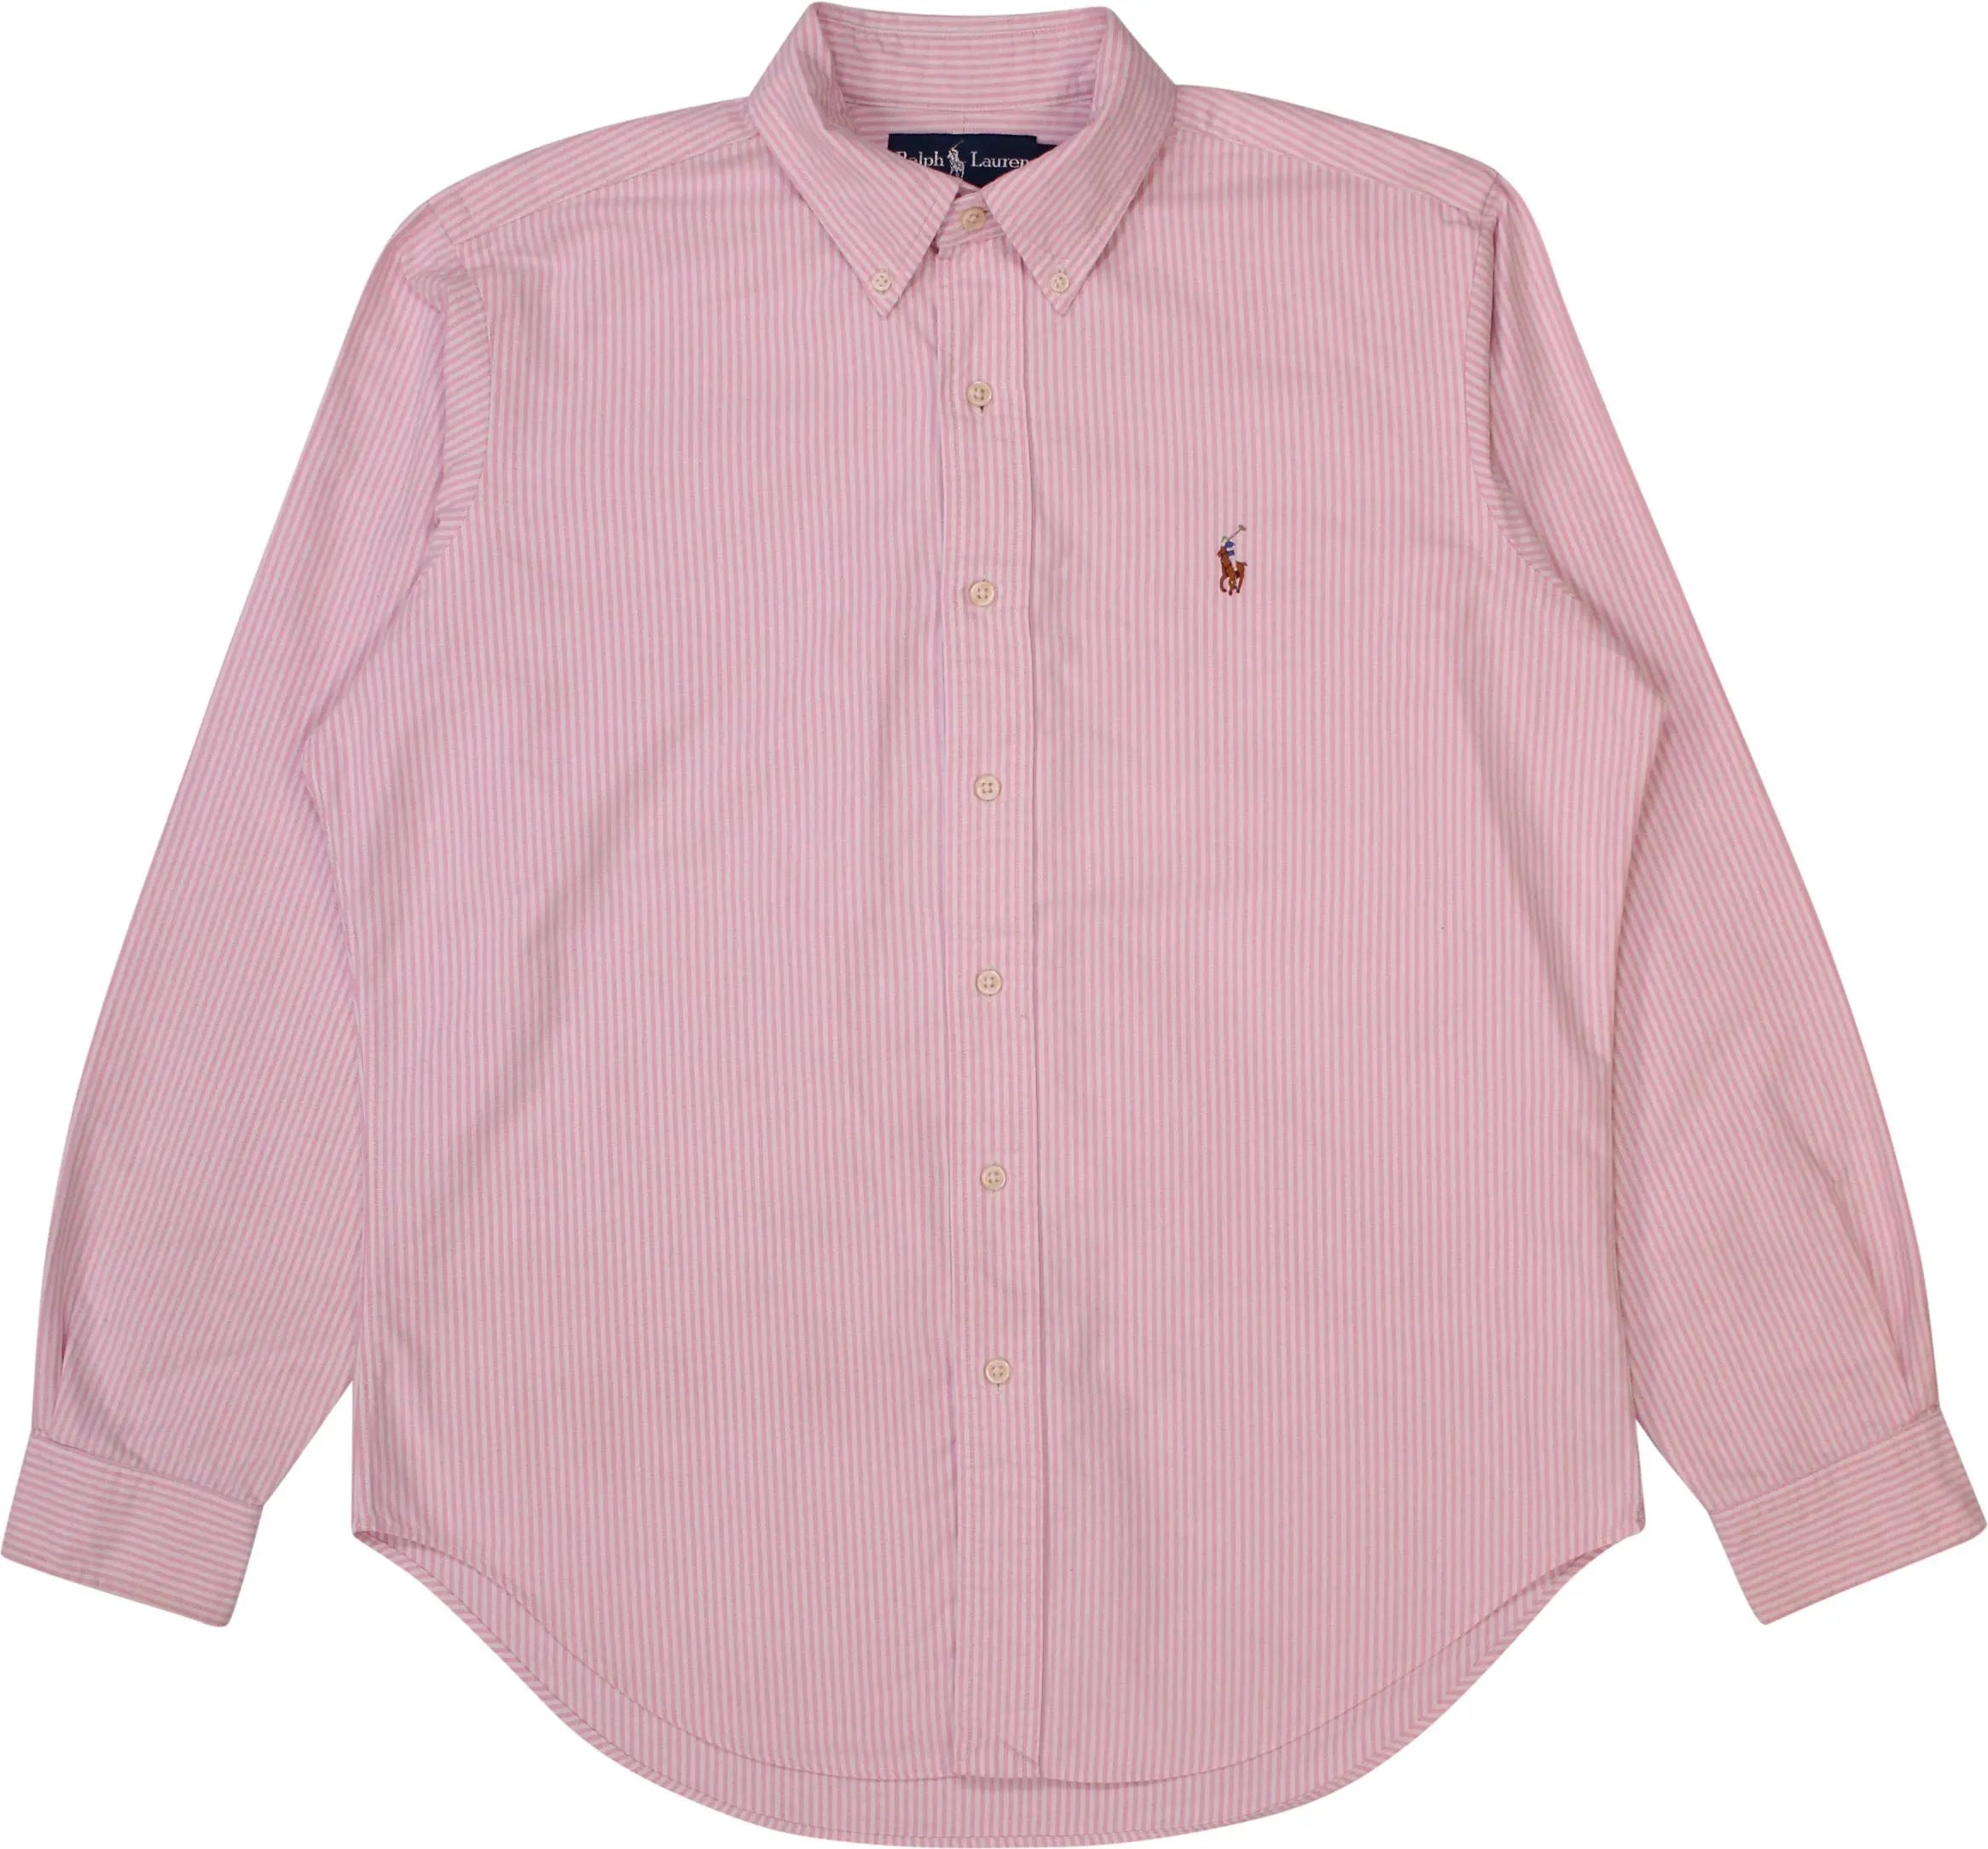 Ralph Lauren - Pink Striped Shirt by Ralph Lauren- ThriftTale.com - Vintage and second handclothing